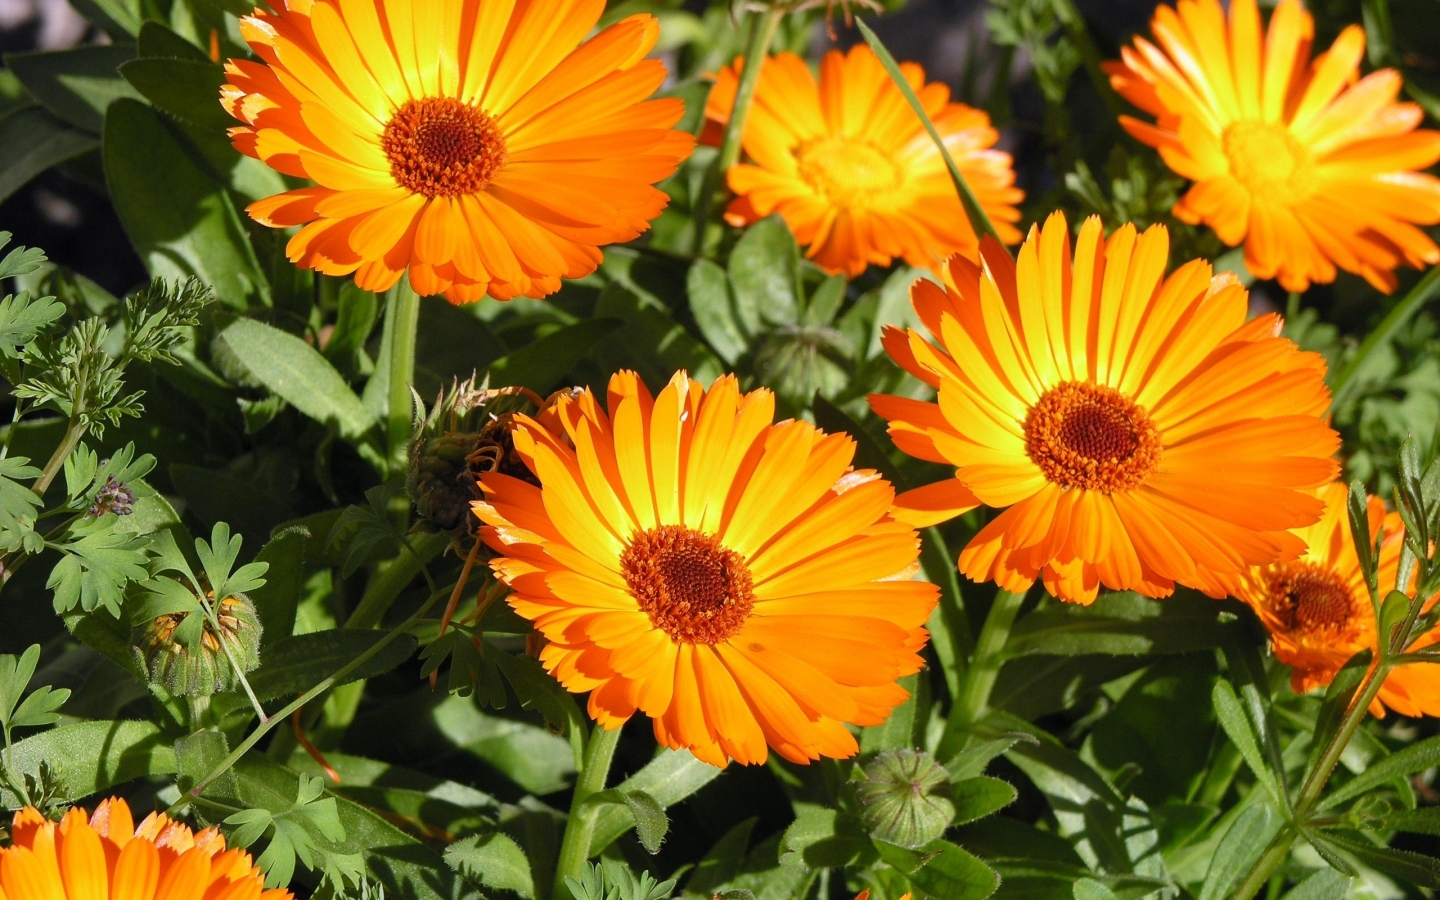 Sunbathing Flower for 1440 x 900 widescreen resolution